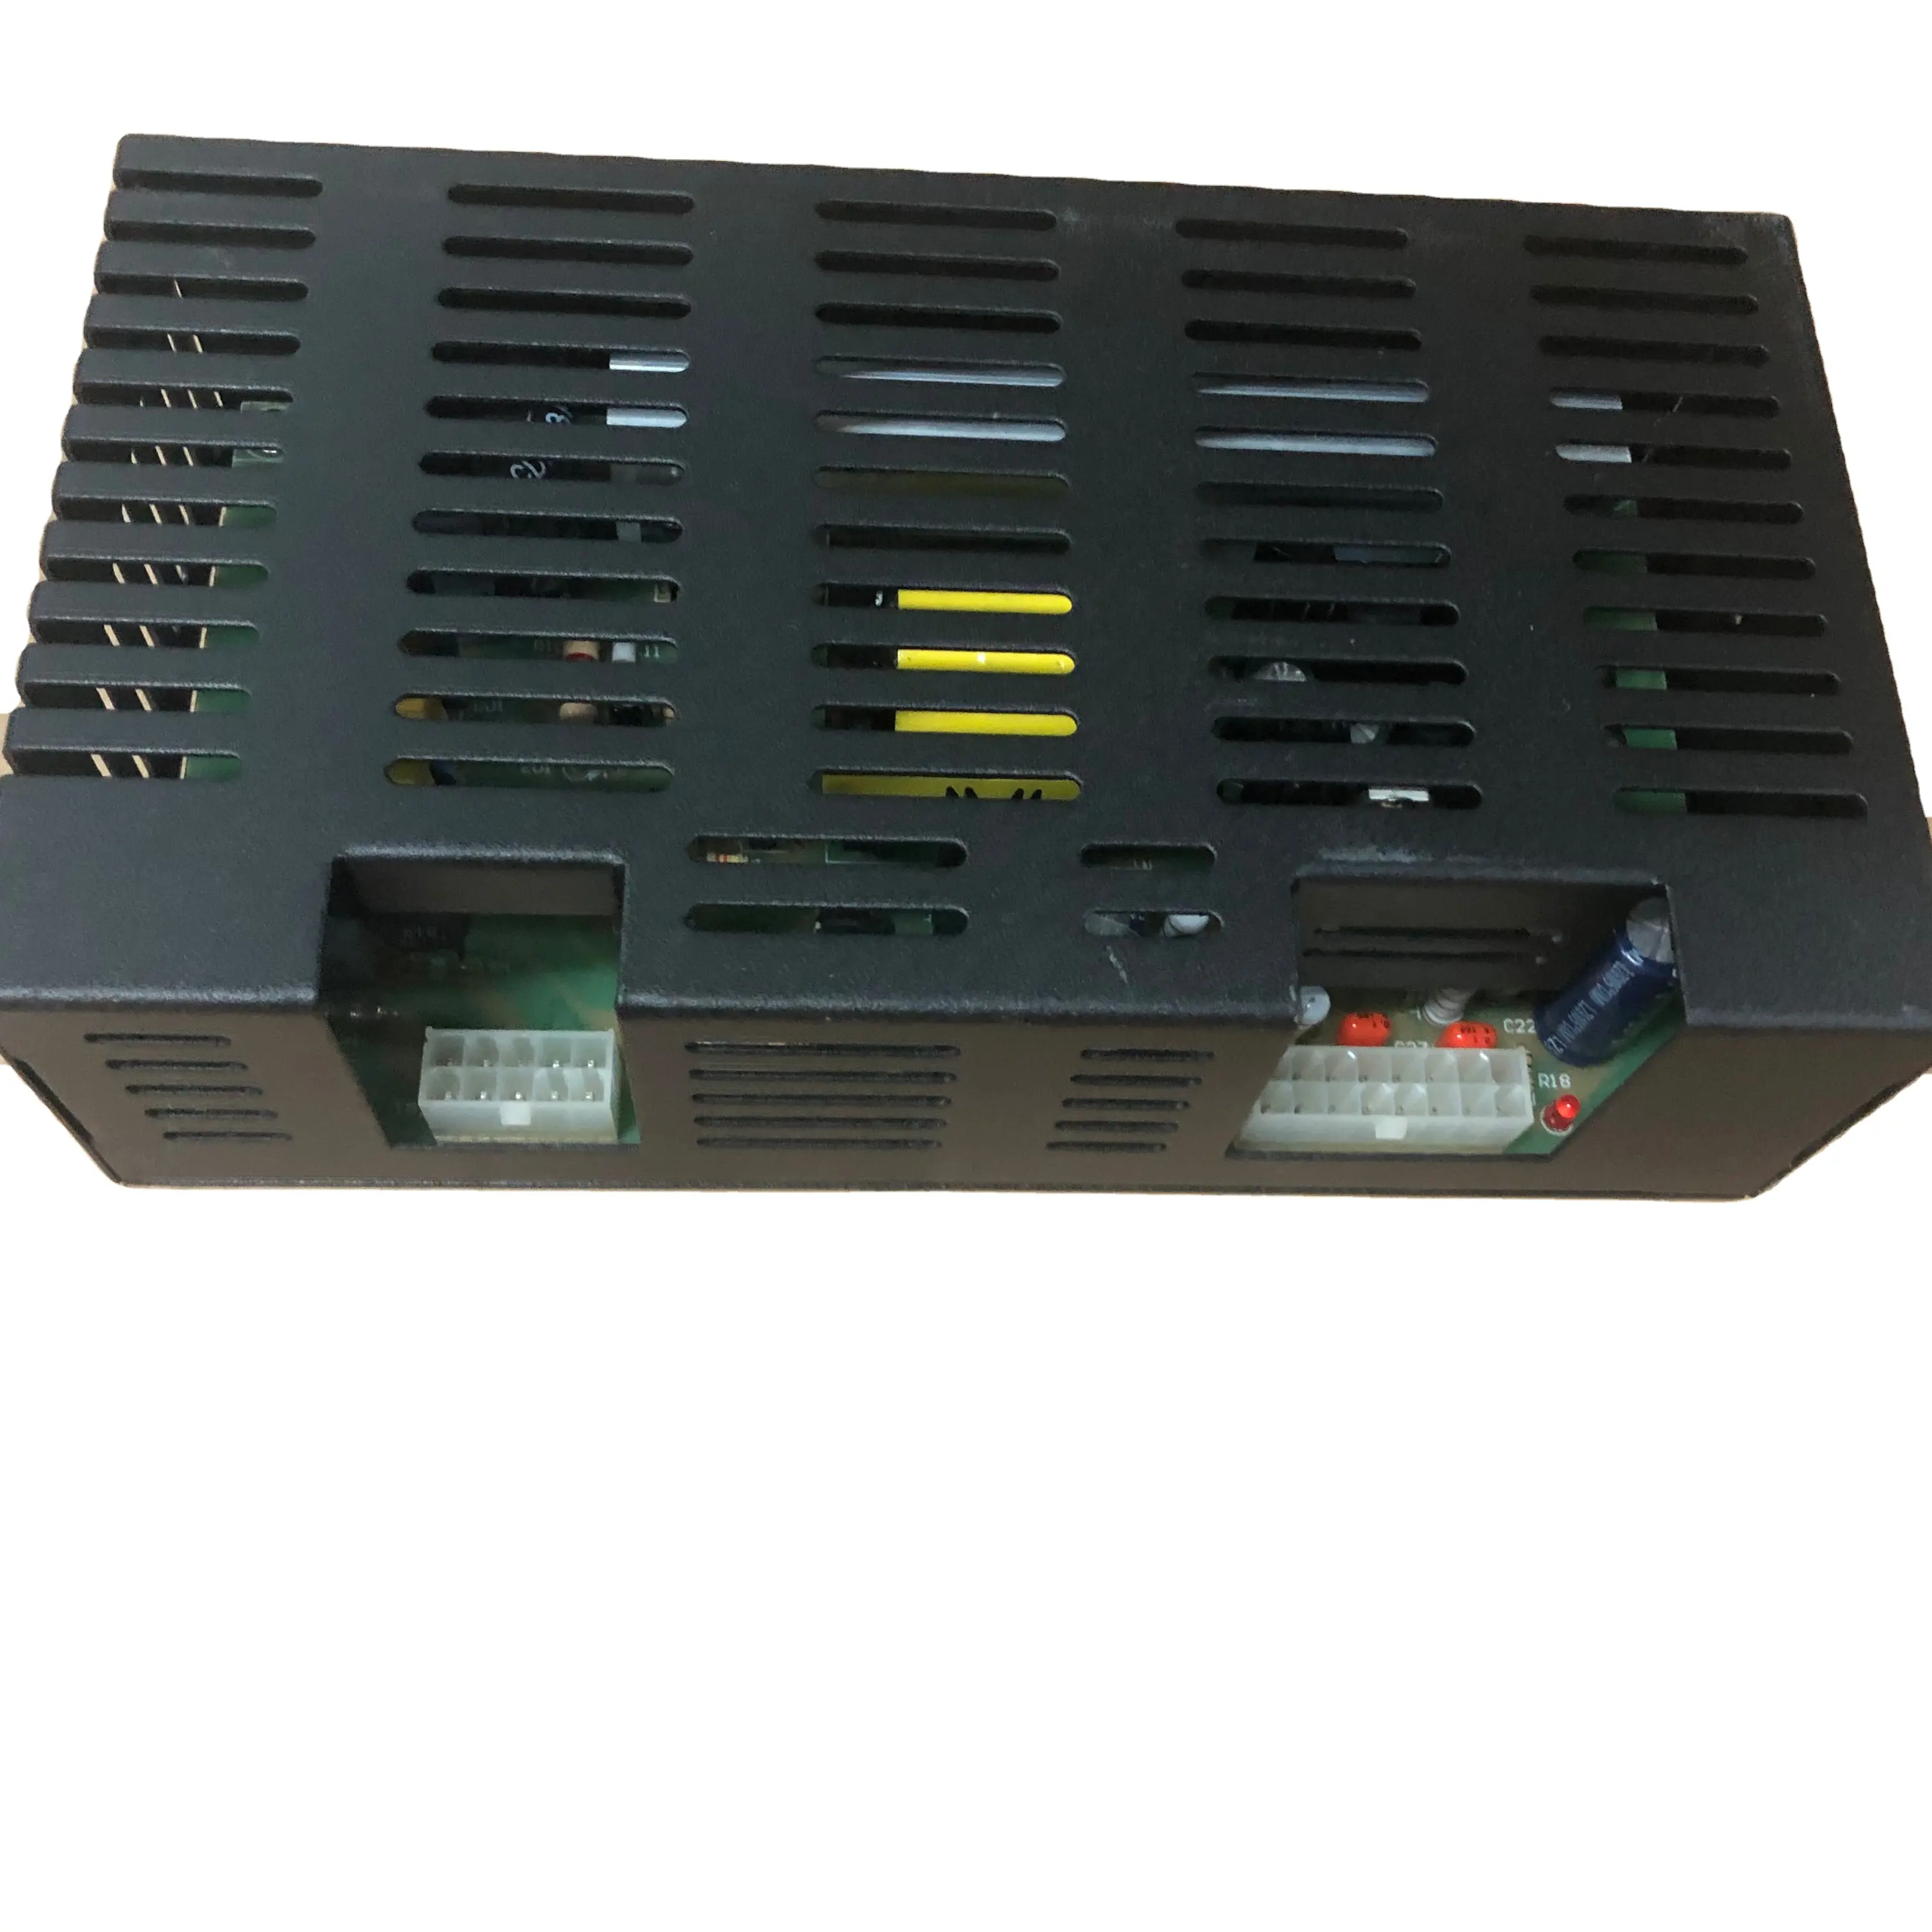 Alternatif Linx 5900 Power Supply untuk Linx Inkjet Printer Mesin